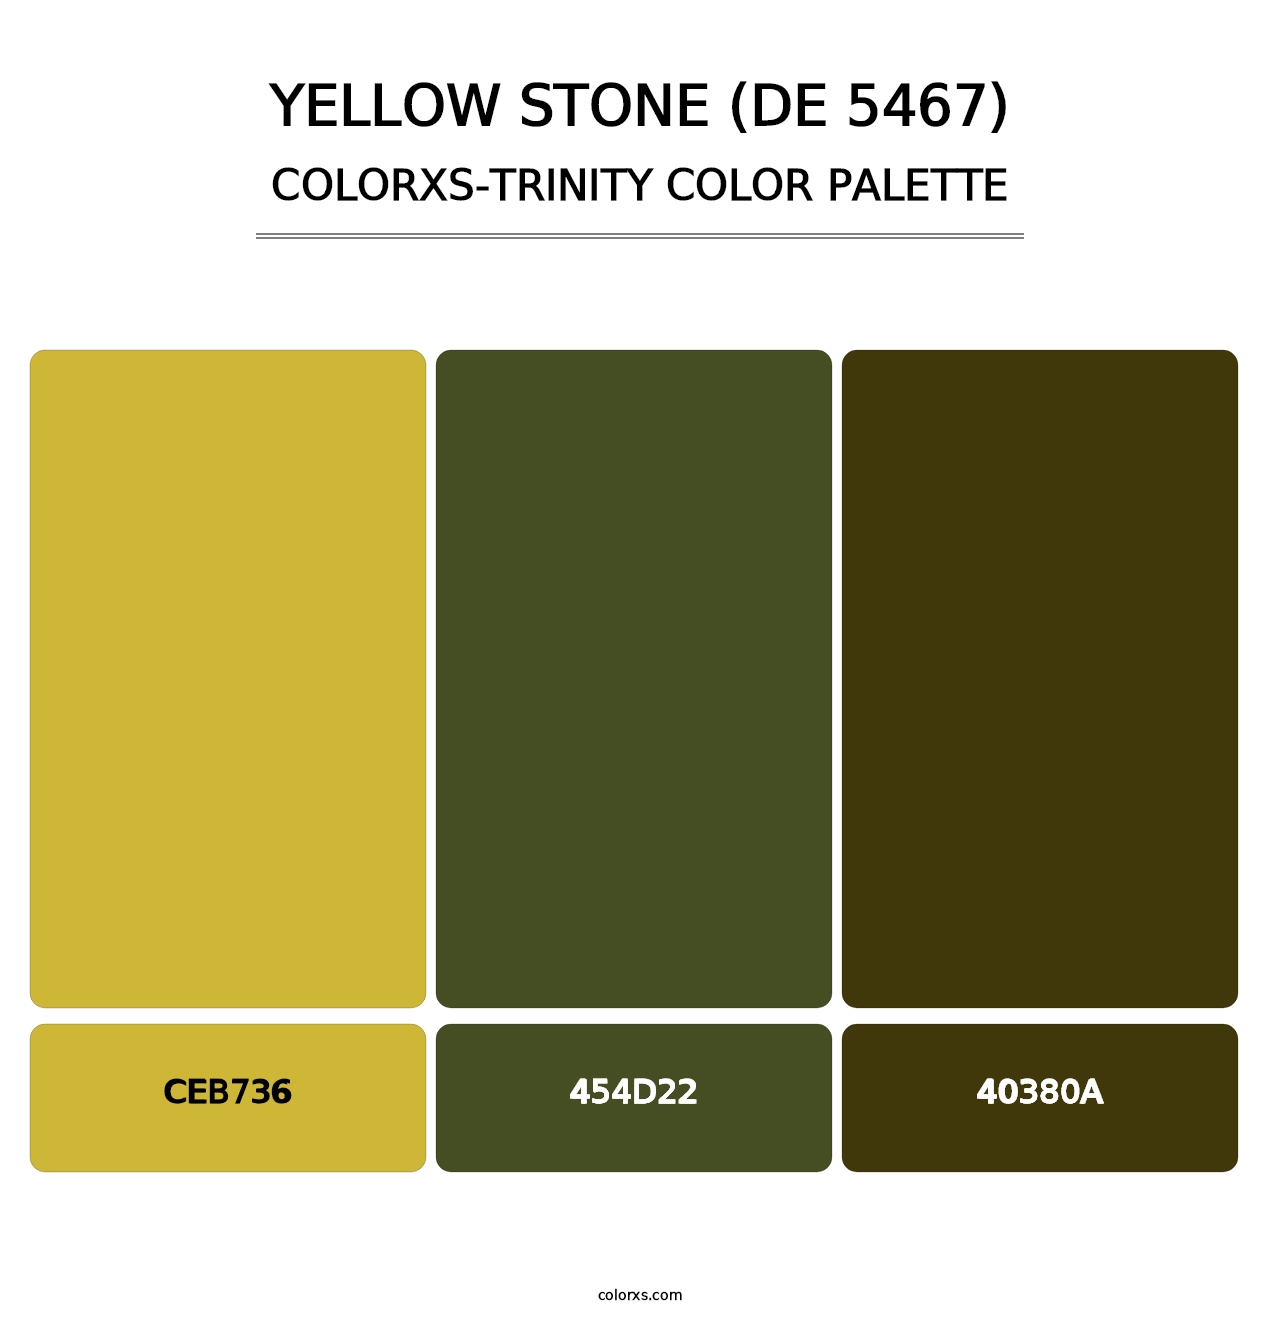 Yellow Stone (DE 5467) - Colorxs Trinity Palette